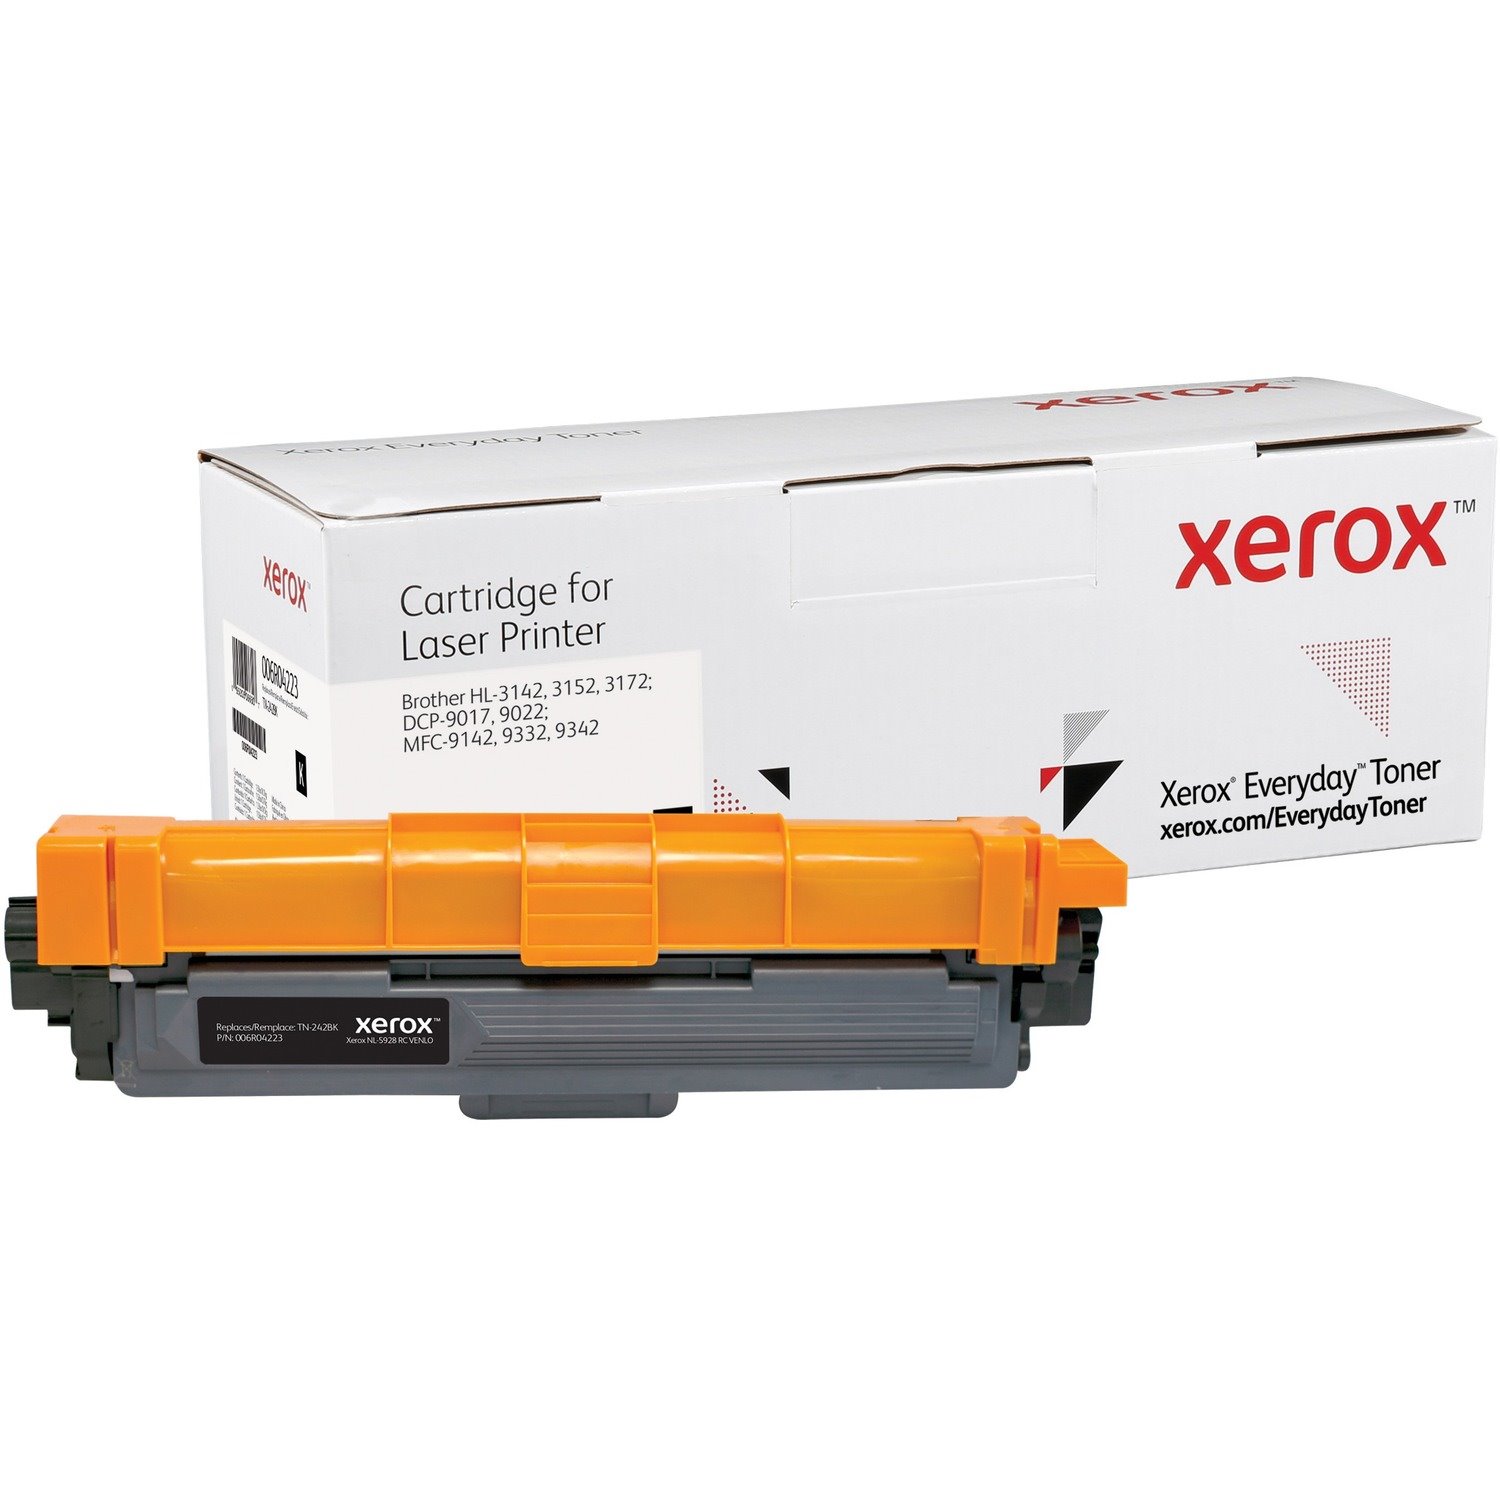 Xerox Everyday Laser Toner Cartridge - Alternative for Brother (TN-242BK) - Black Pack